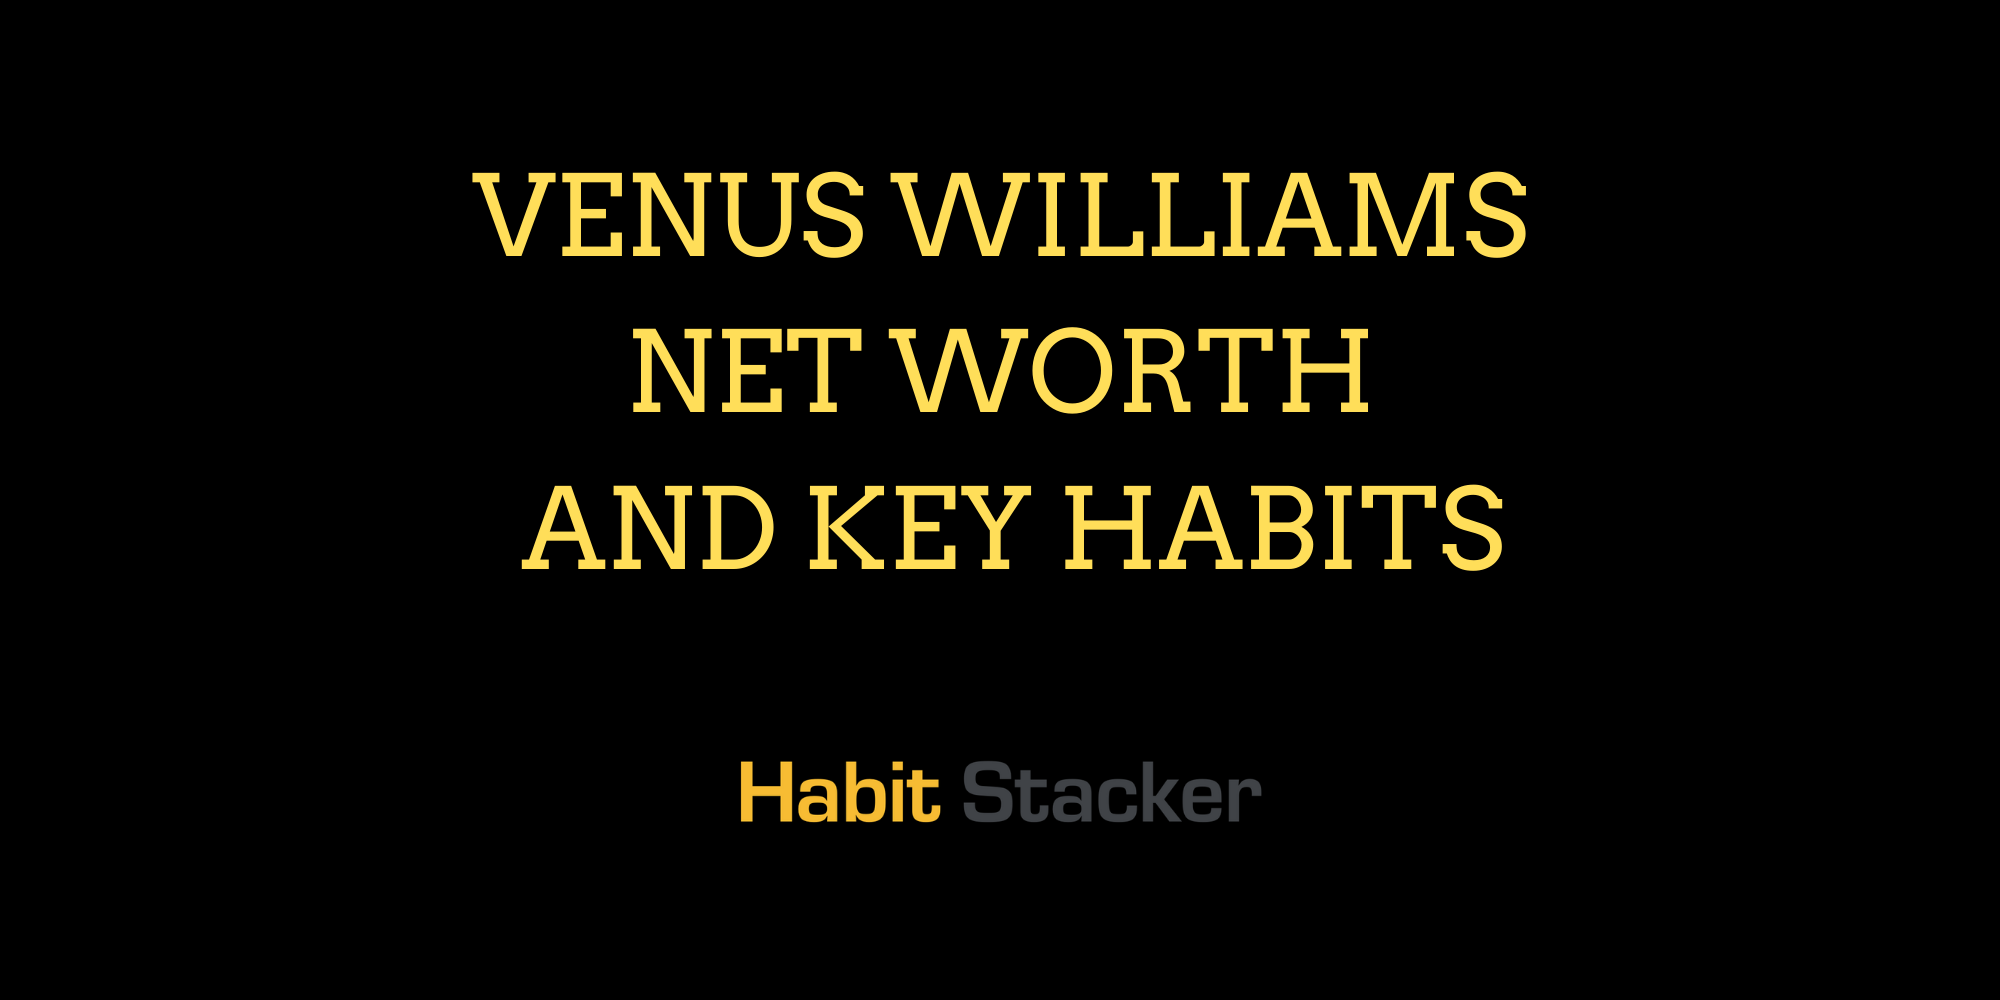 Venus Williams Net Worth and Key Habits